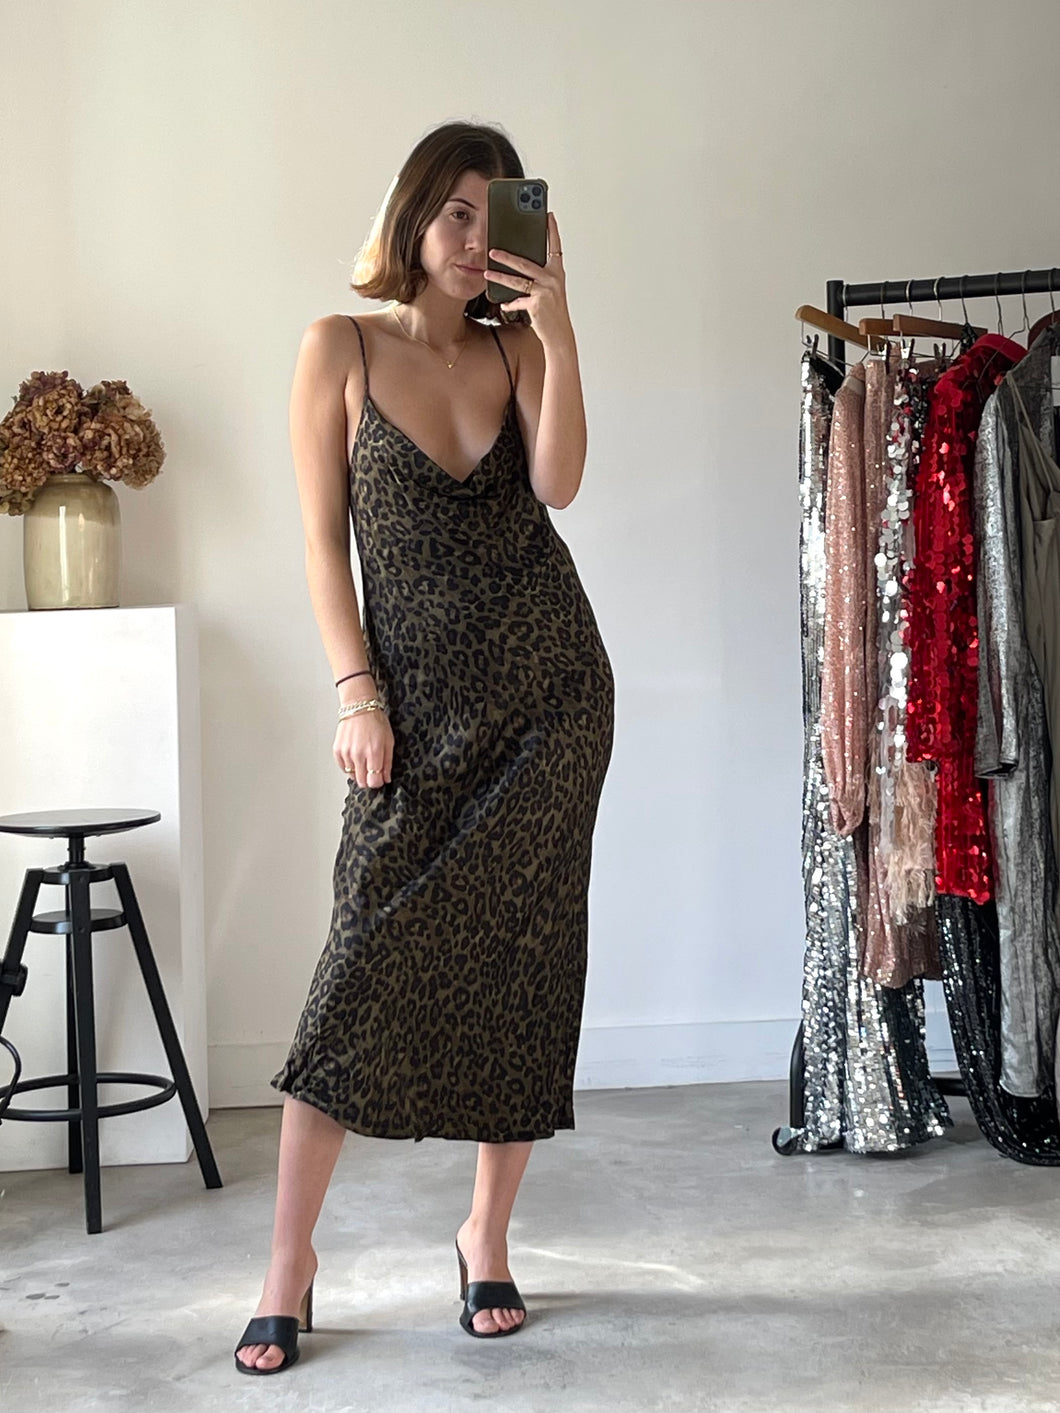 Zara Leopard Satin Dress